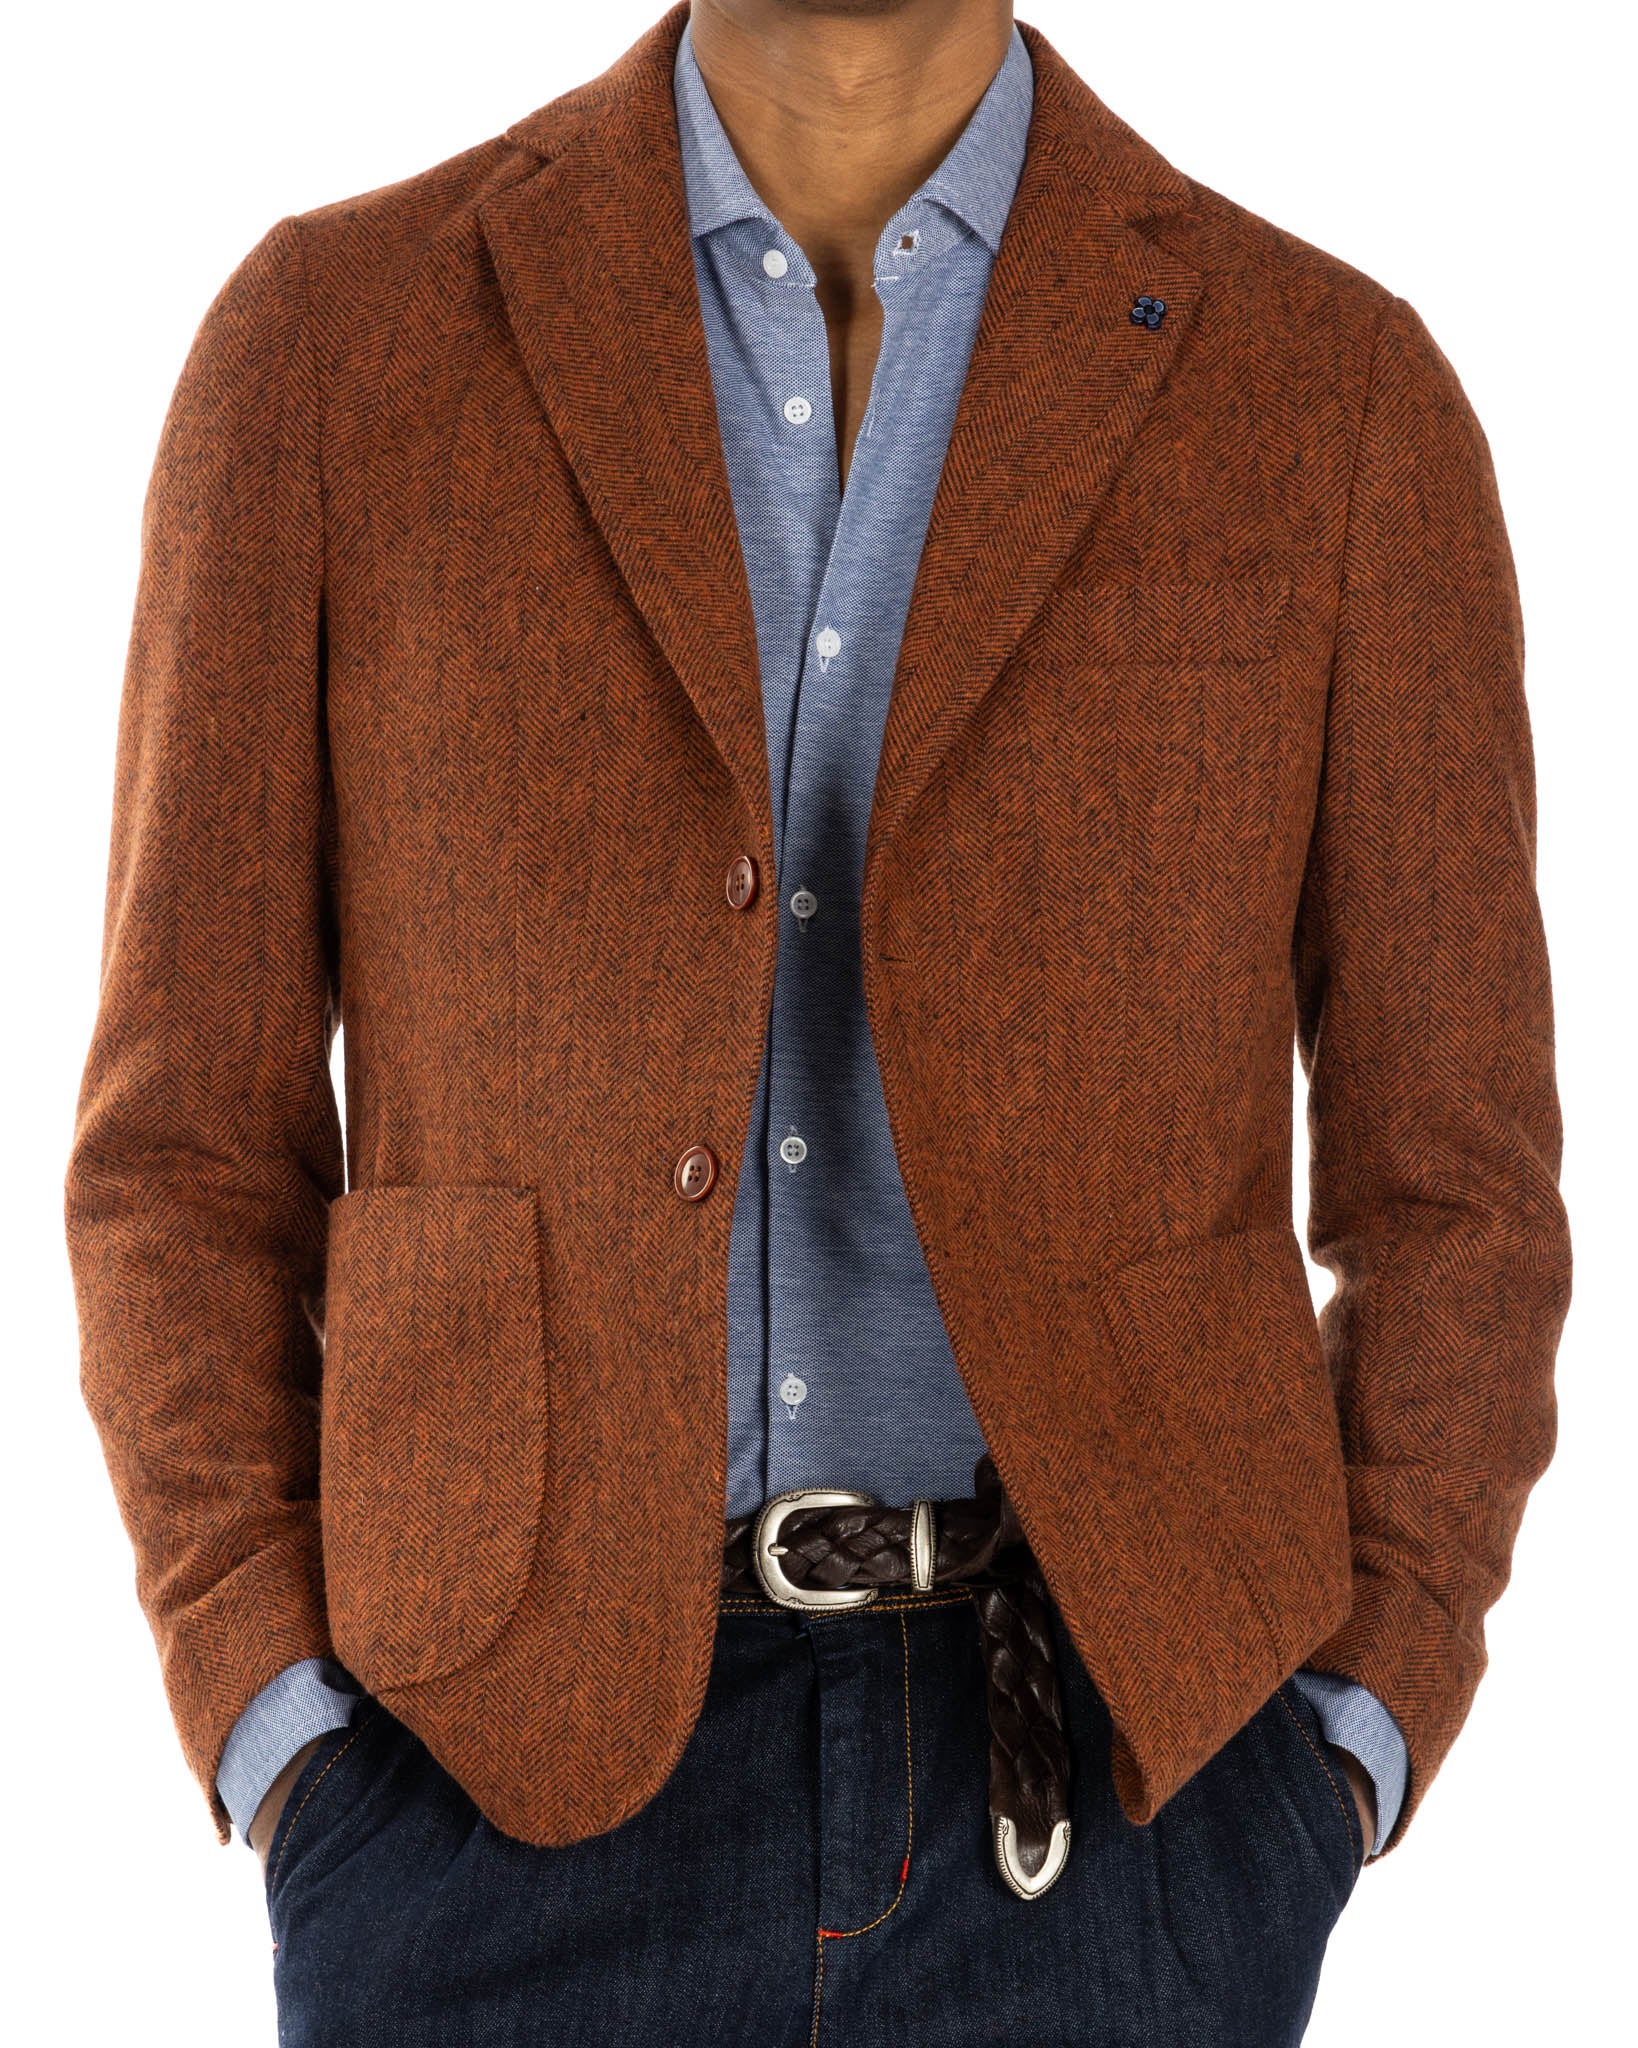 Belluno - orange herringbone weave jacket